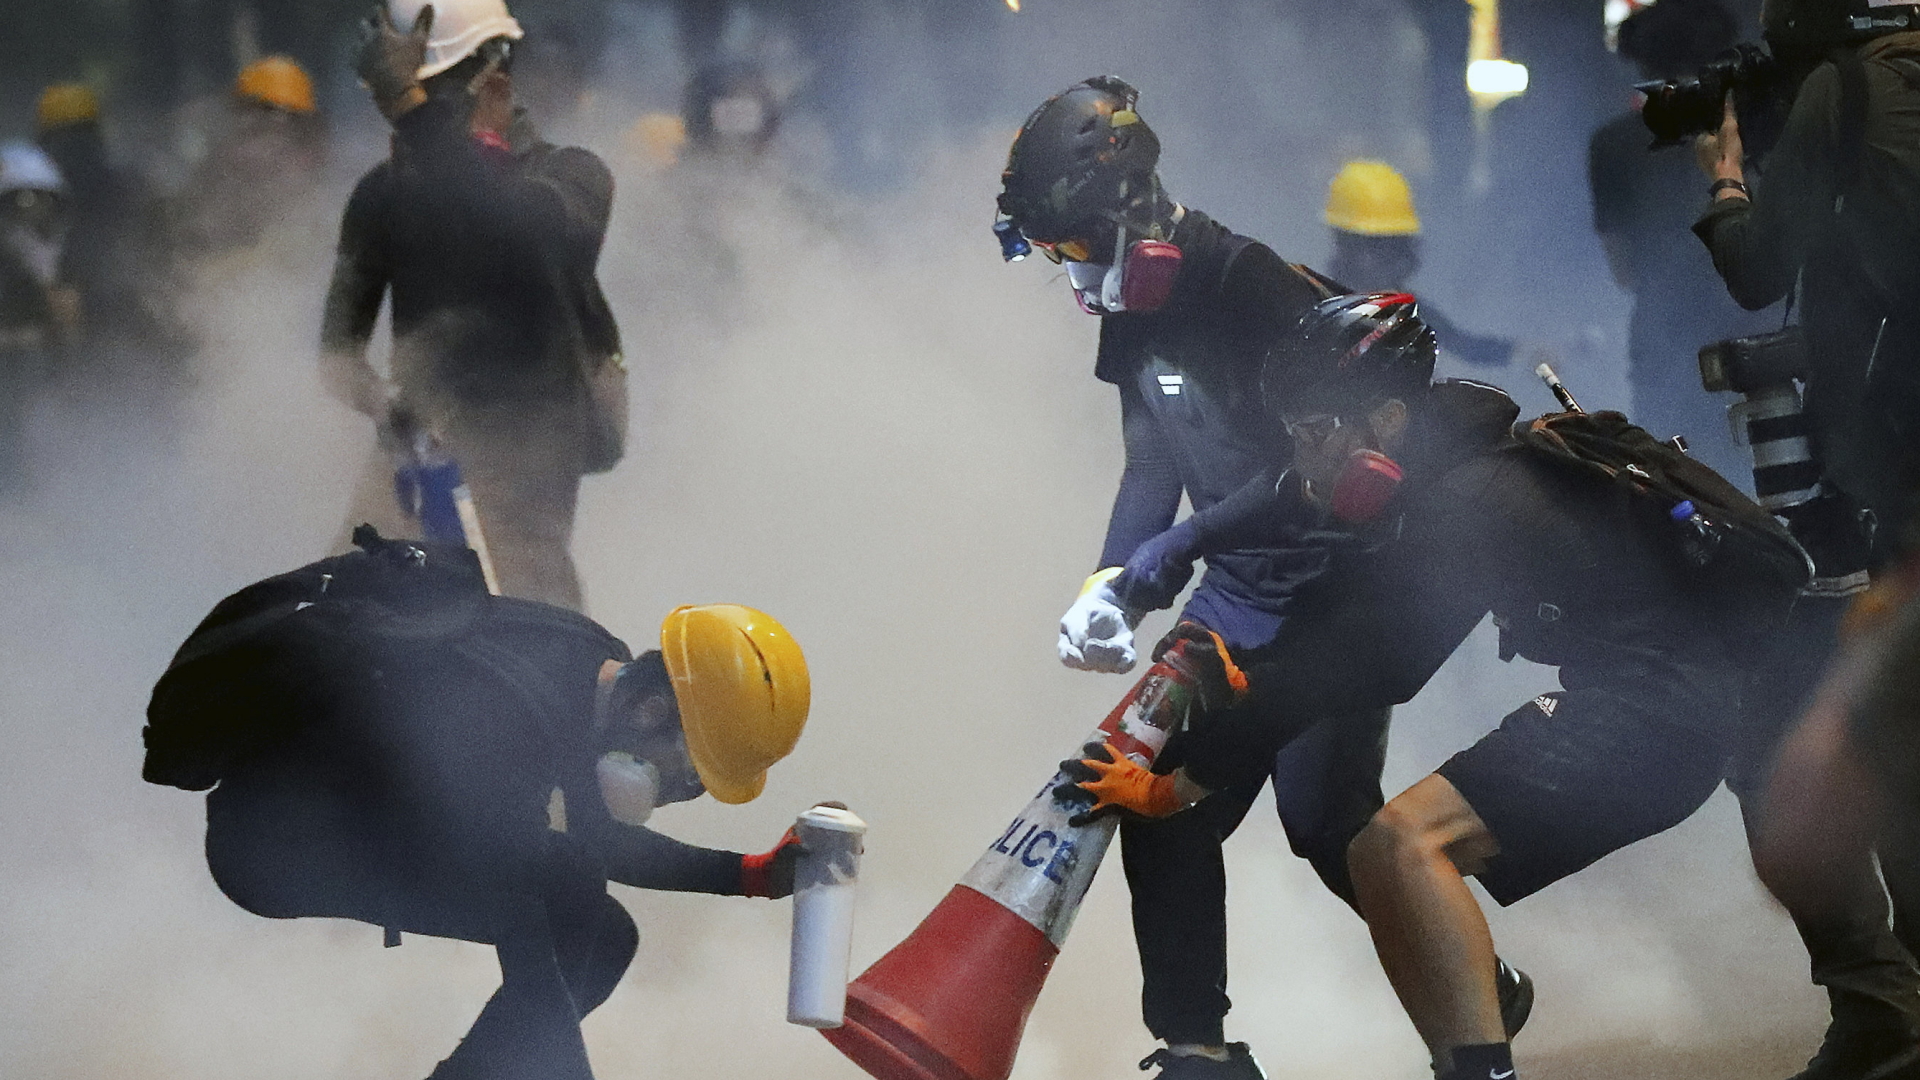 Demonstranten in Hongkong in Tränengaswolke | dpa